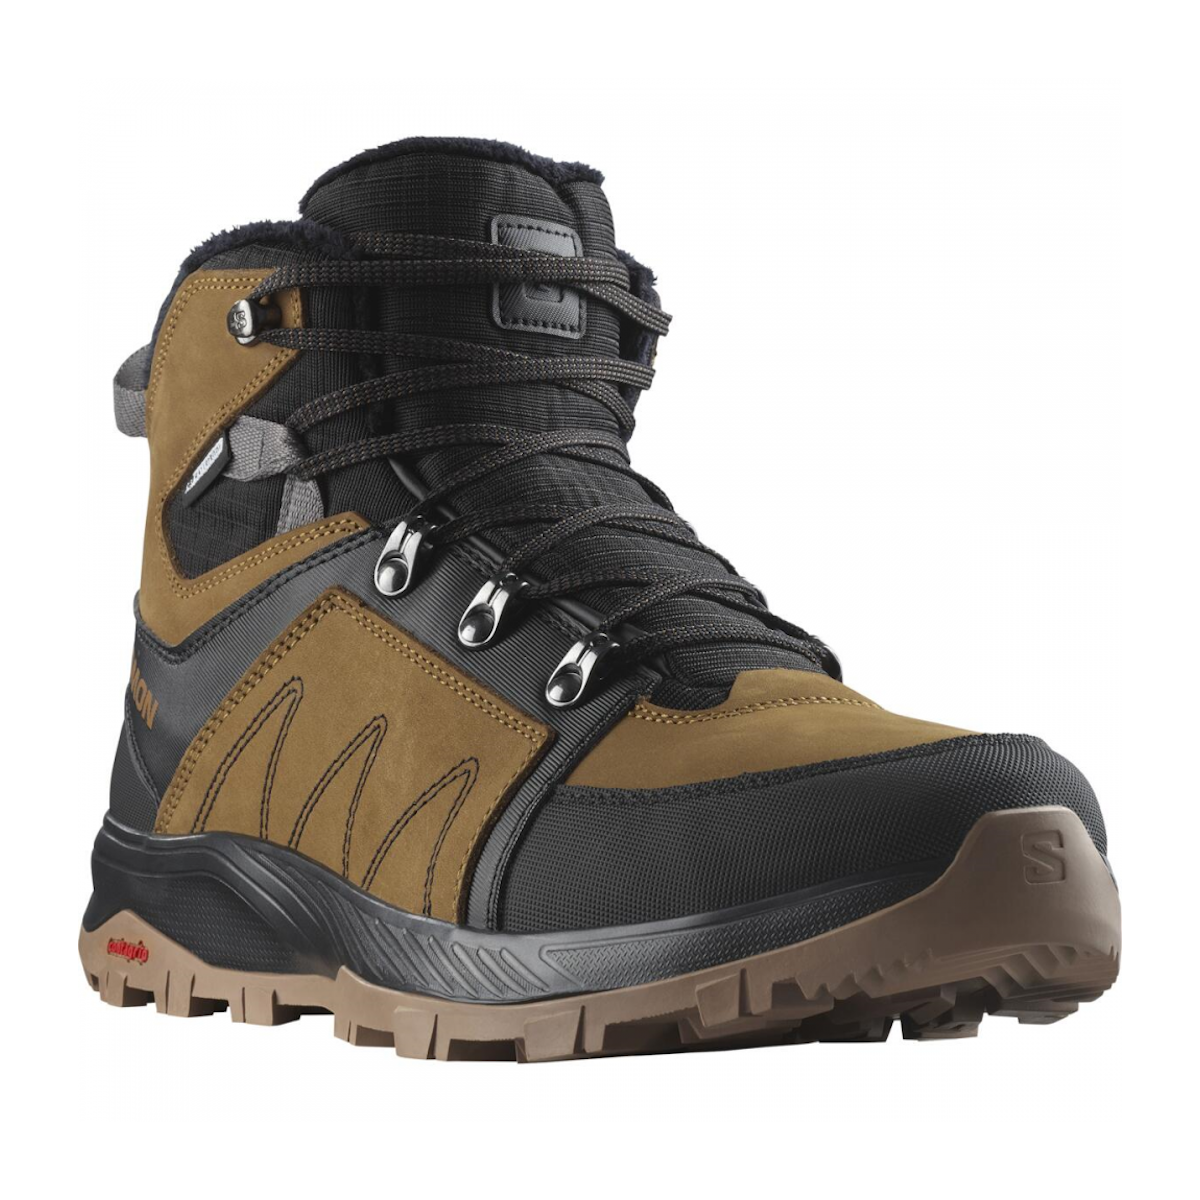 SALOMON OUTCHILL TS CSWP winter shoes - brown/black